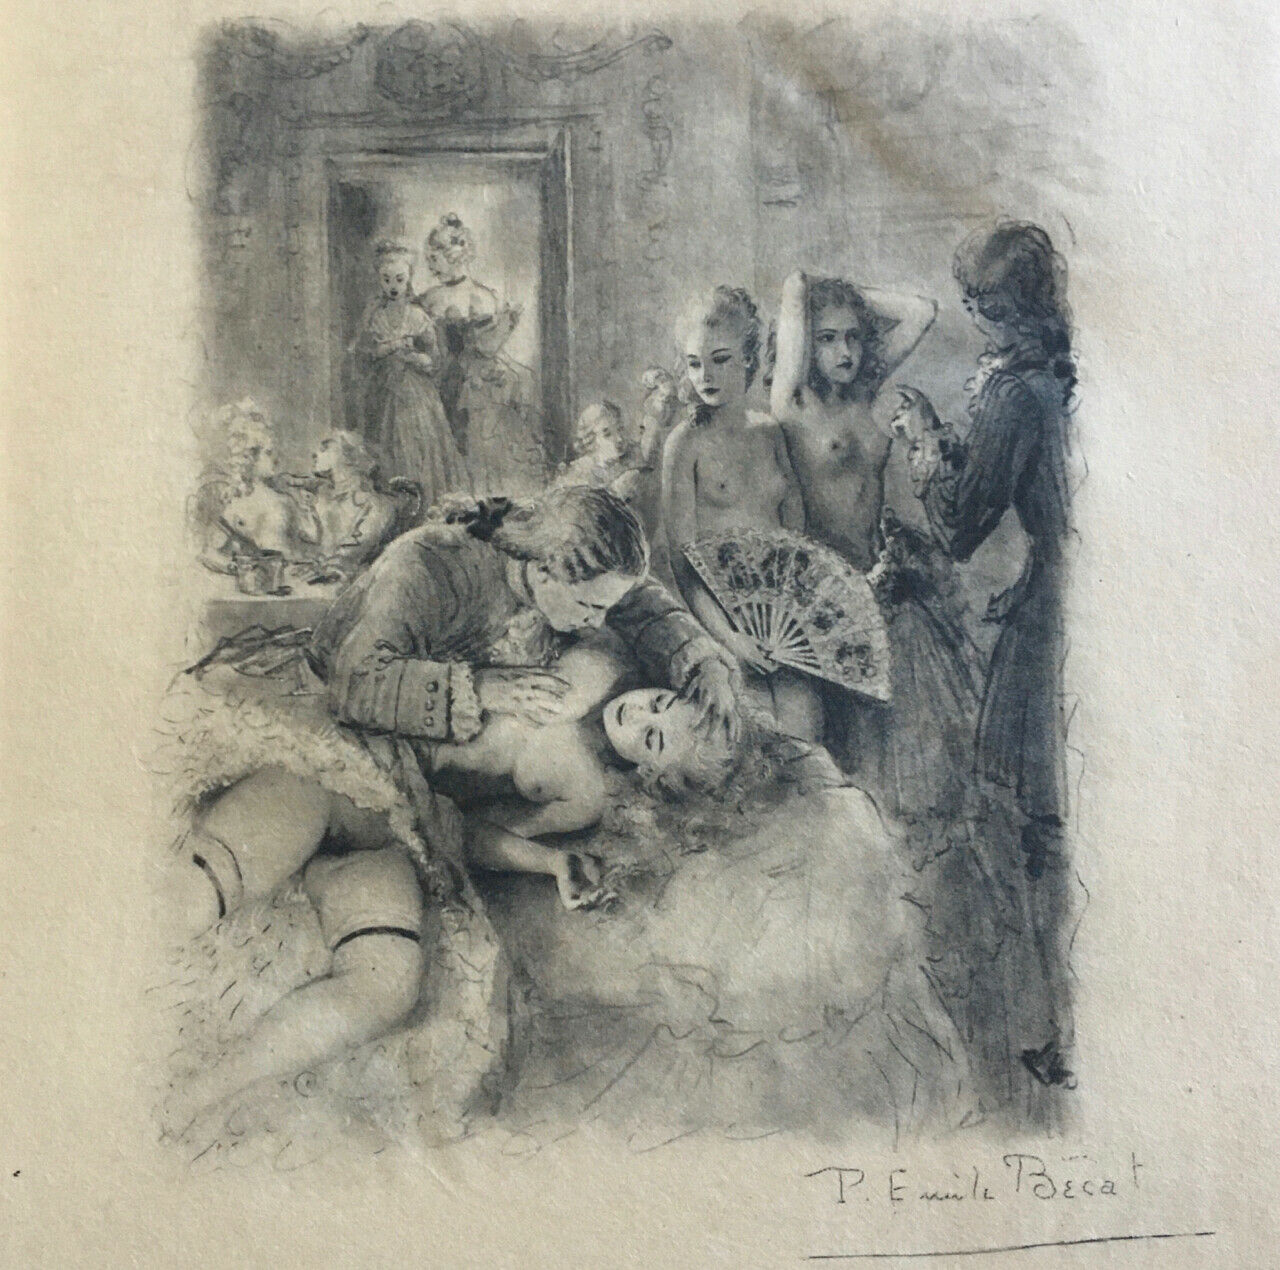 Diderot — The Nun — ill. Bécat — triple suite + original — Larrive — 1947.